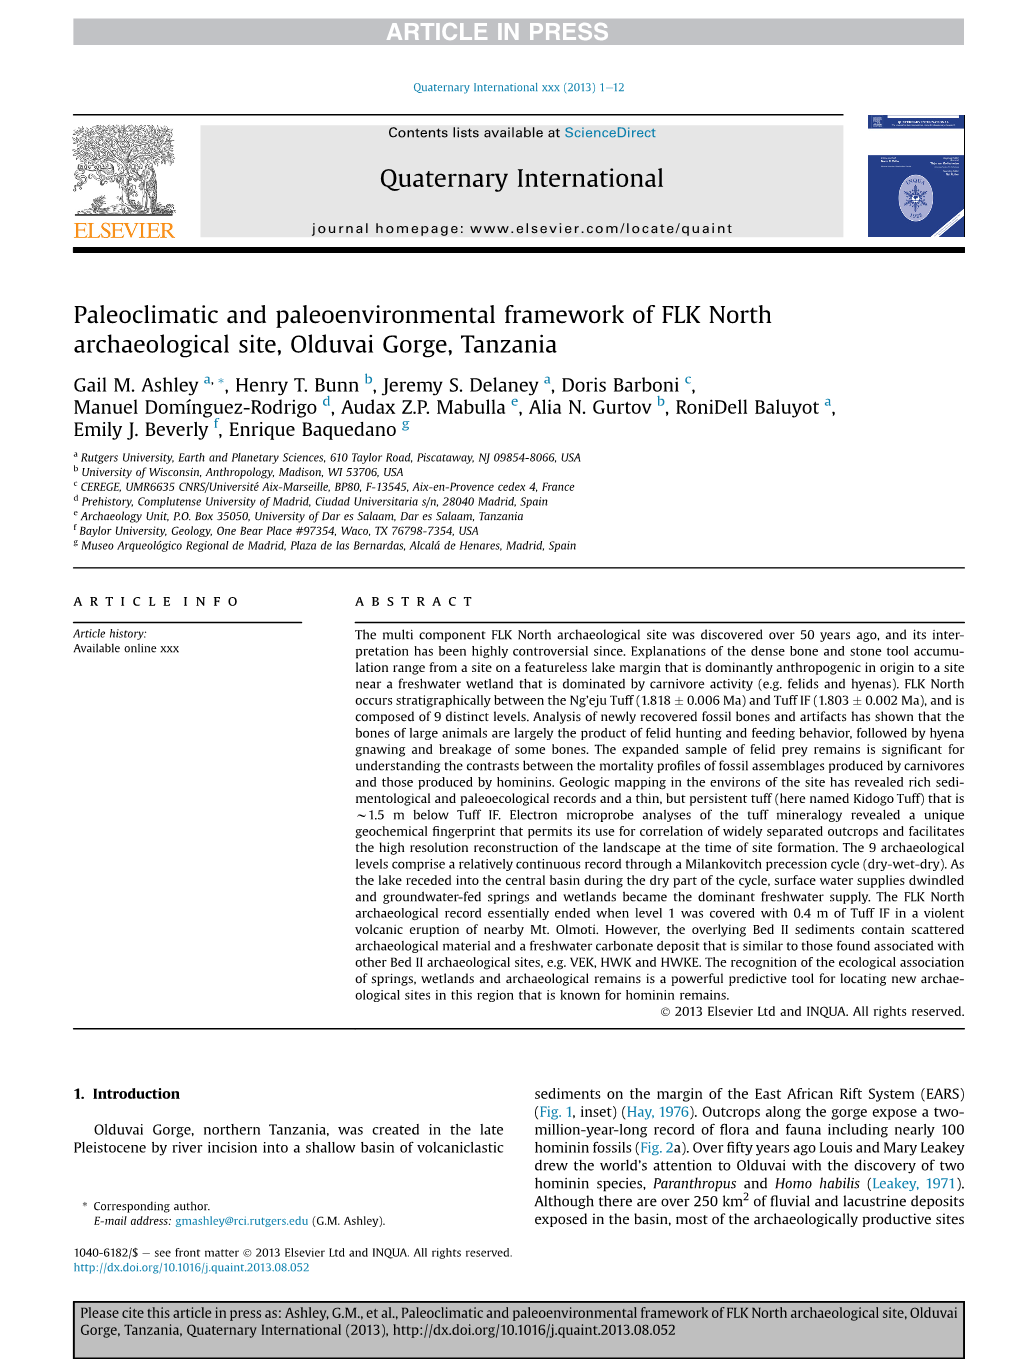 Paleoclimatic and Paleoenvironmental Framework of FLK North Archaeological Site, Olduvai Gorge, Tanzania